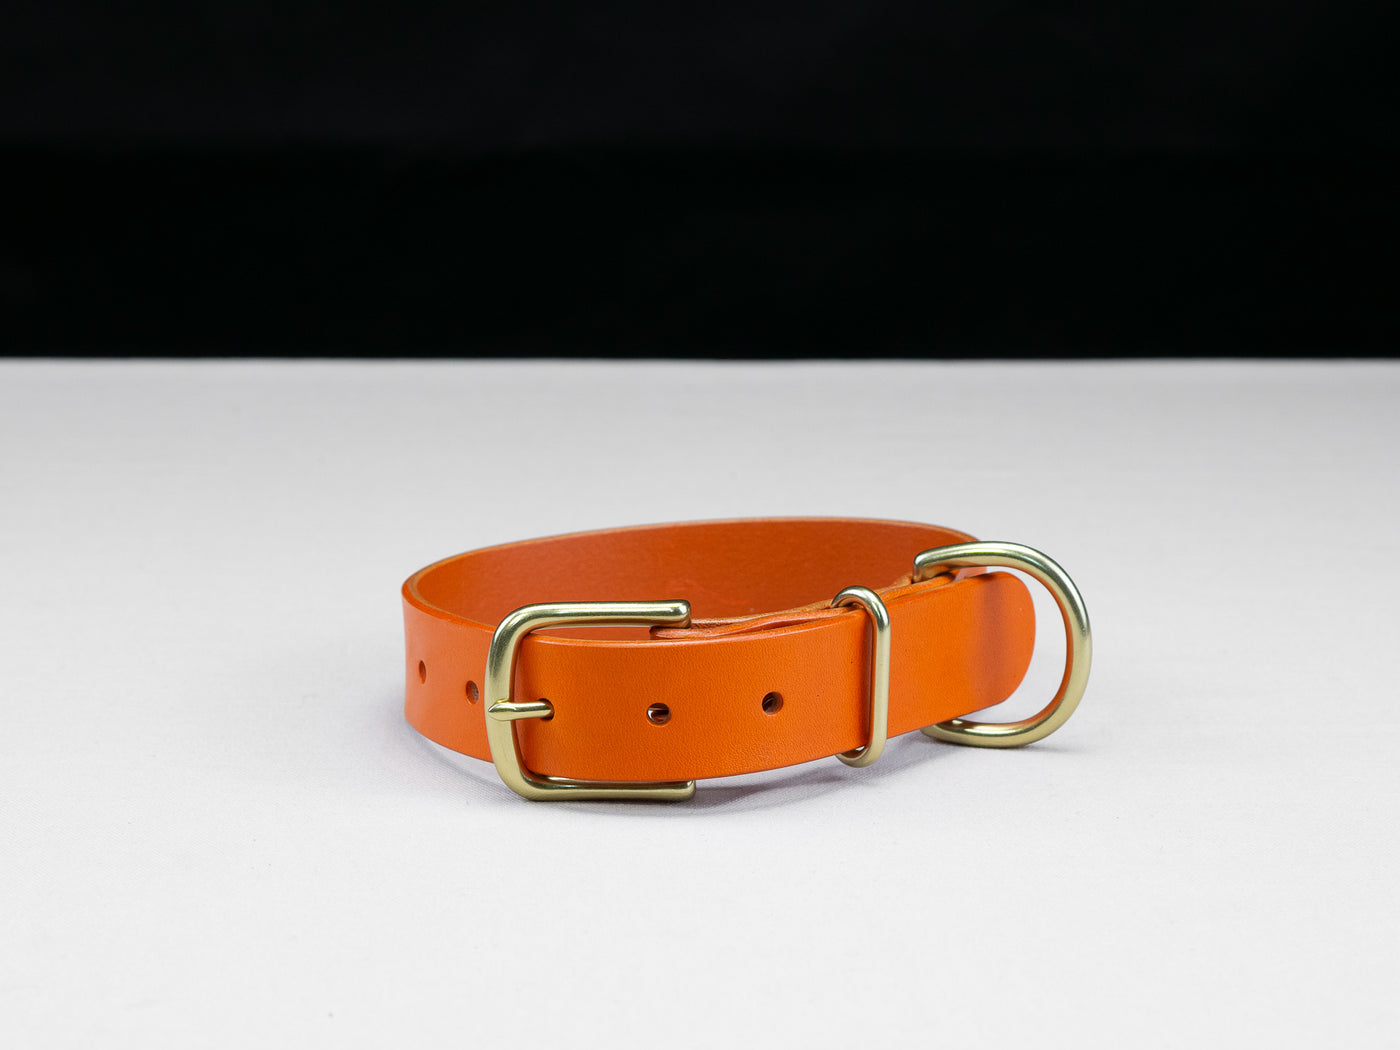 Leather Belt Dog Collar - Carrot Orange English Bridle Leather - Atlas Leathercraft - Handmade Australian Leather Goods